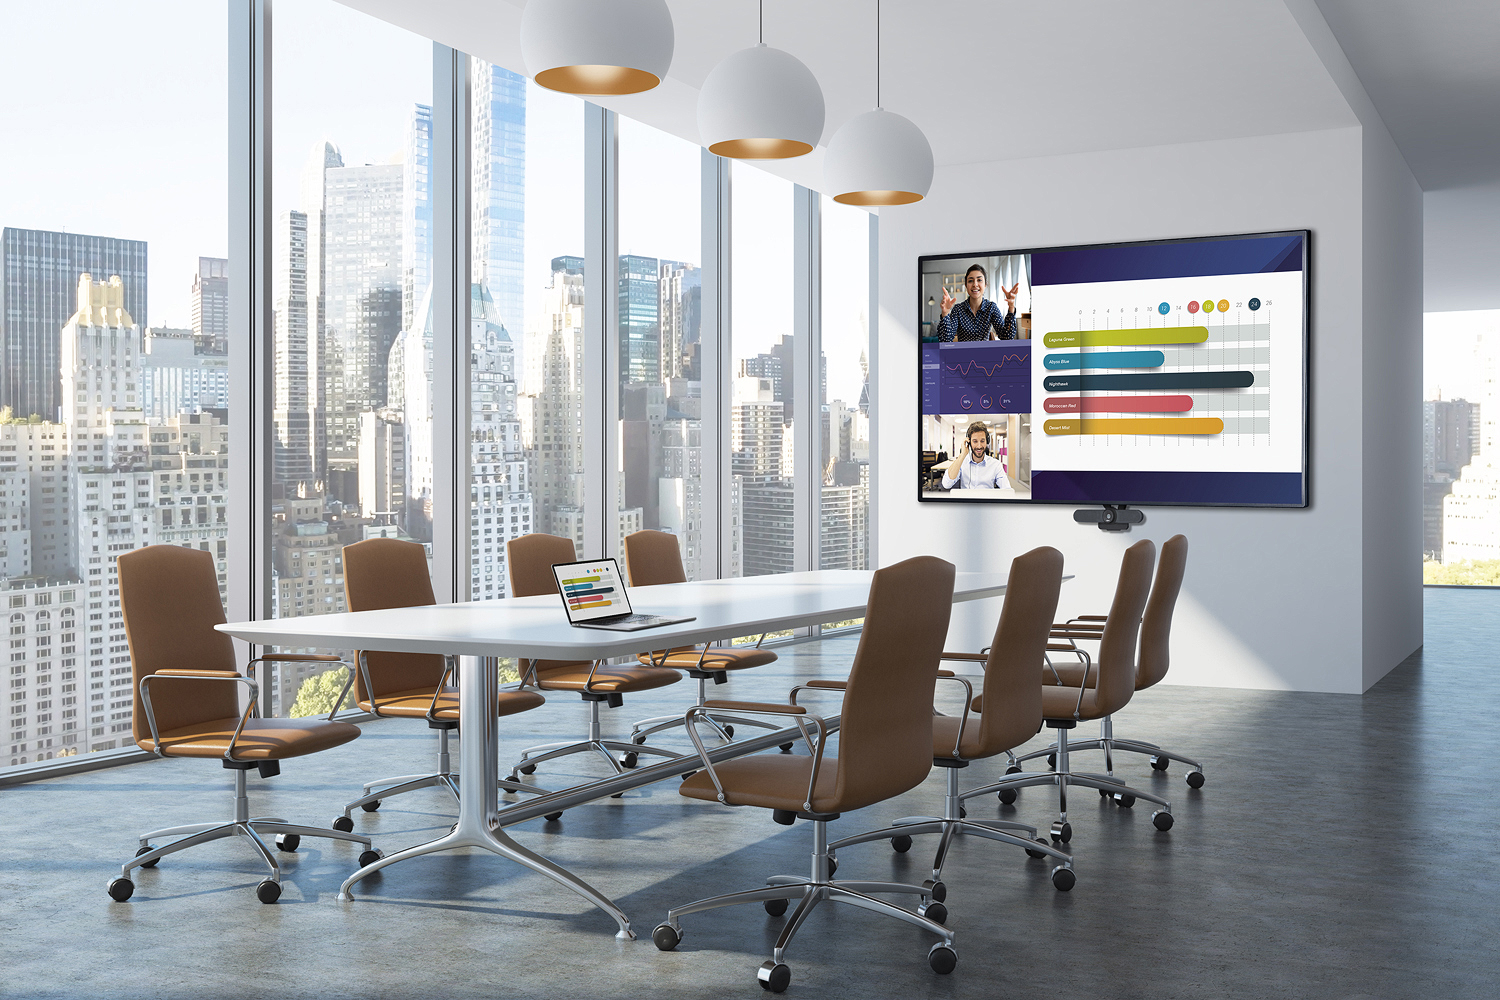 Boardroom with video conferencing